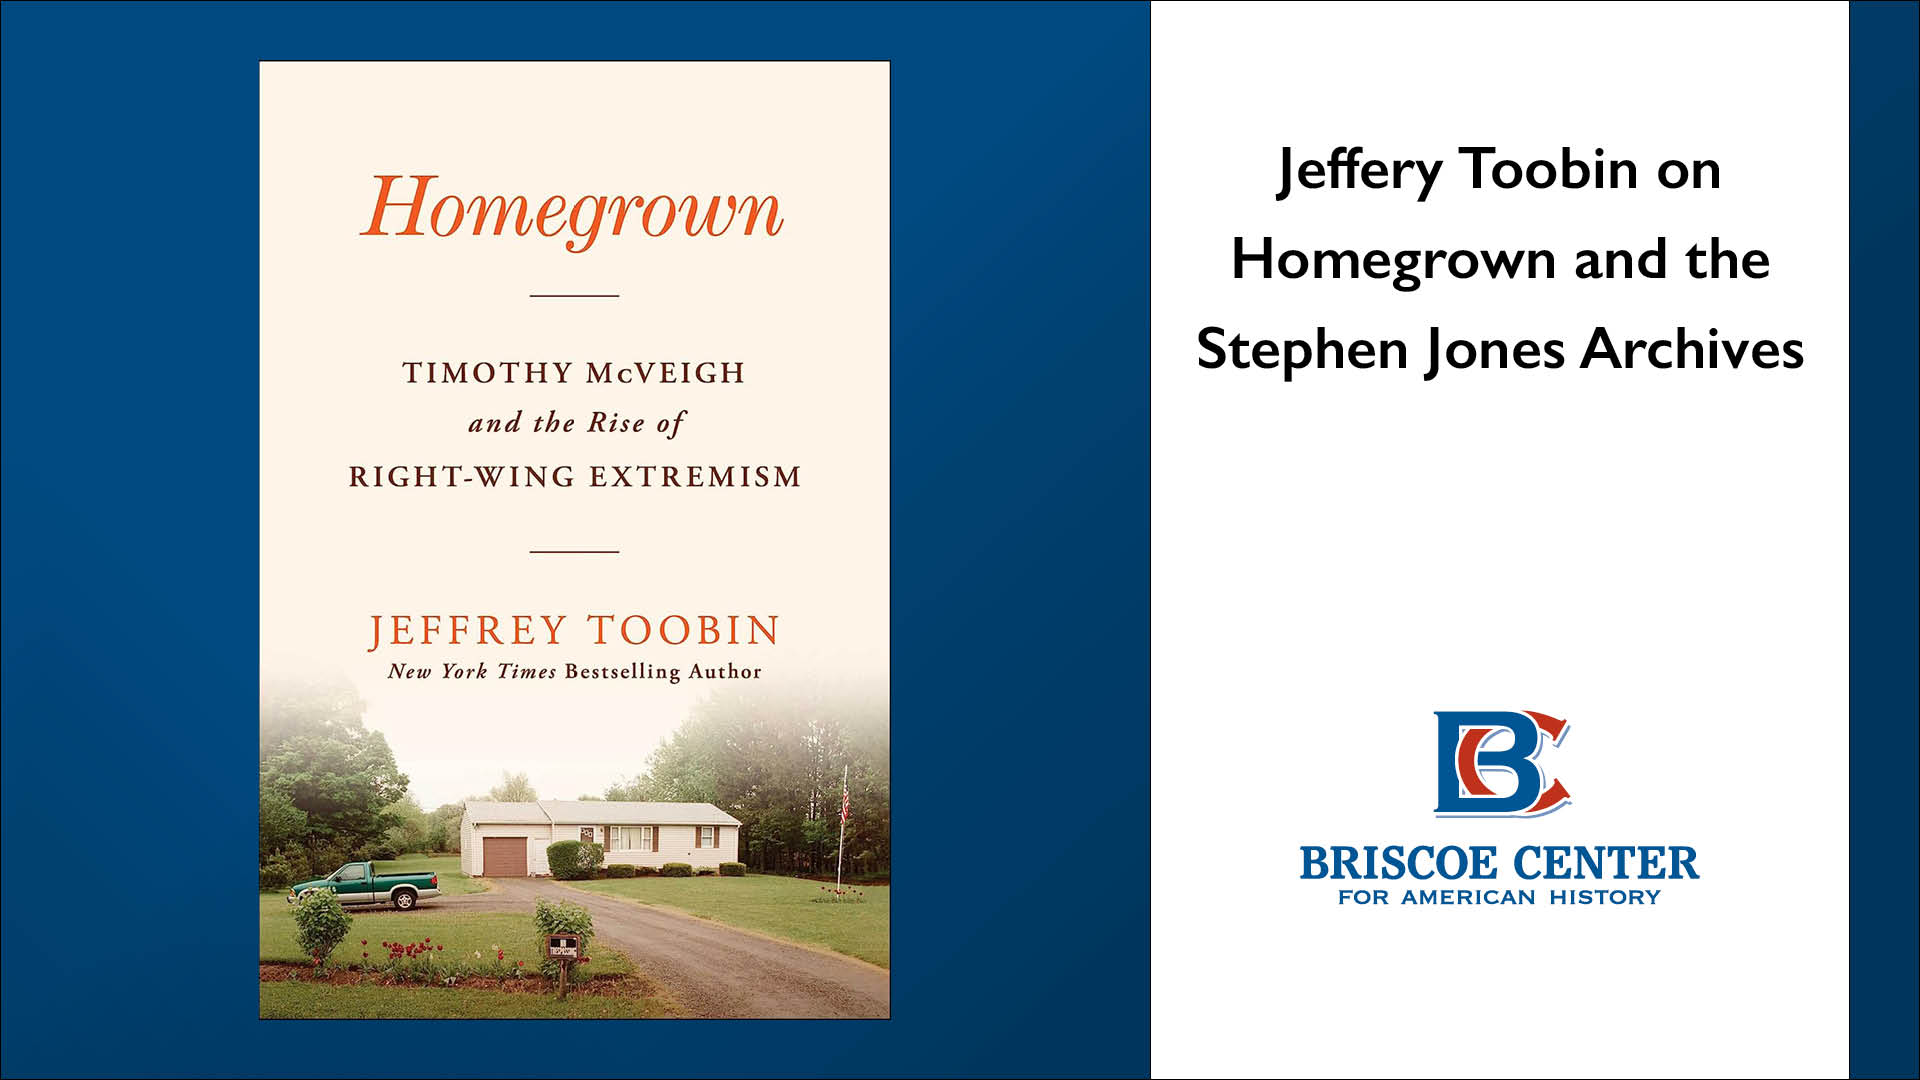 Jeffery Toobin on Homegrown and the Stephen Jones Archives